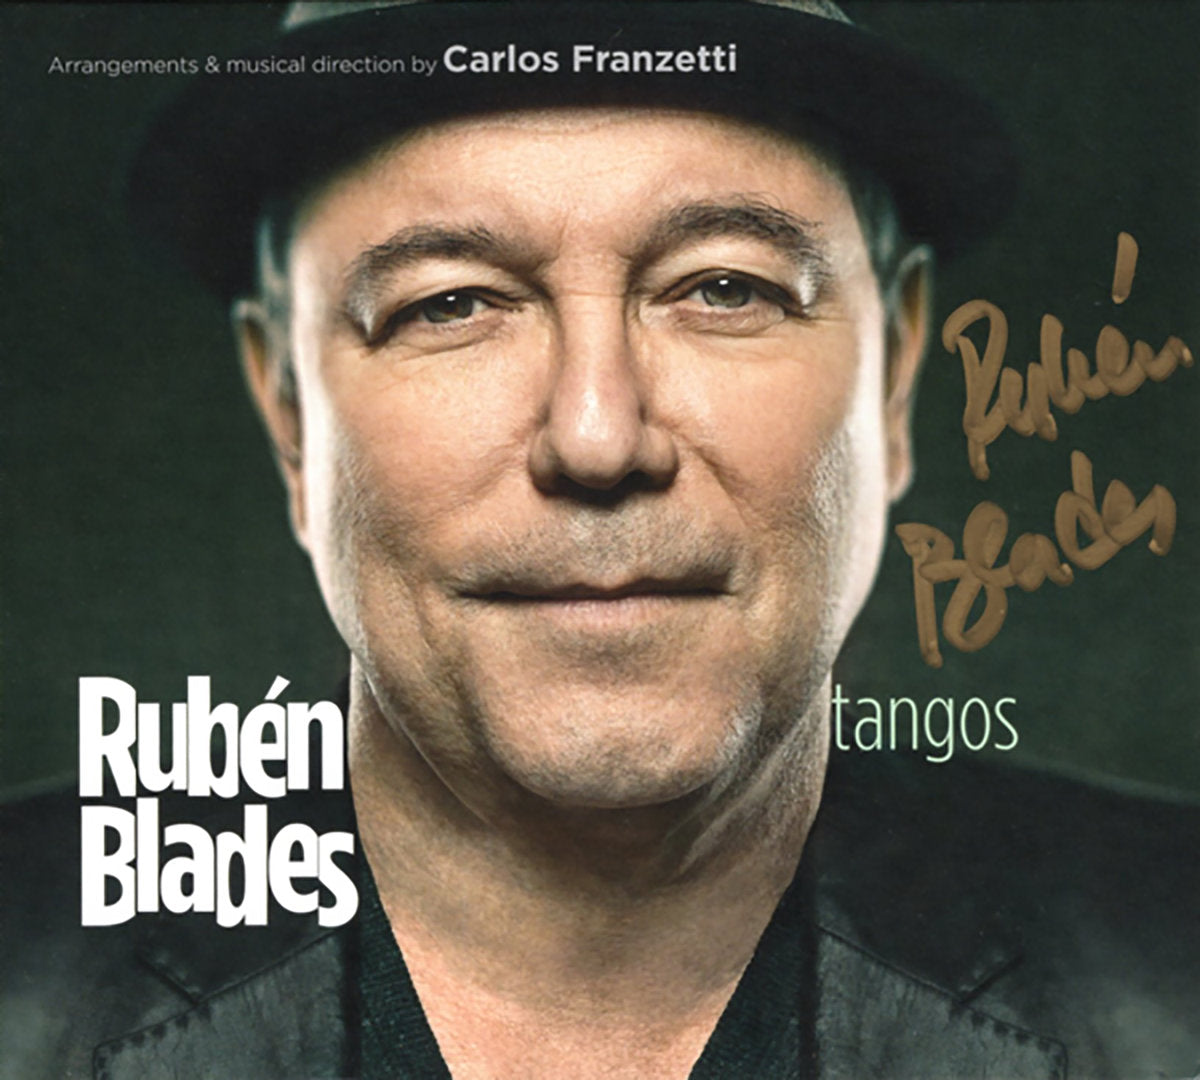 Rubén Blades - "Tangos" Autographed CD